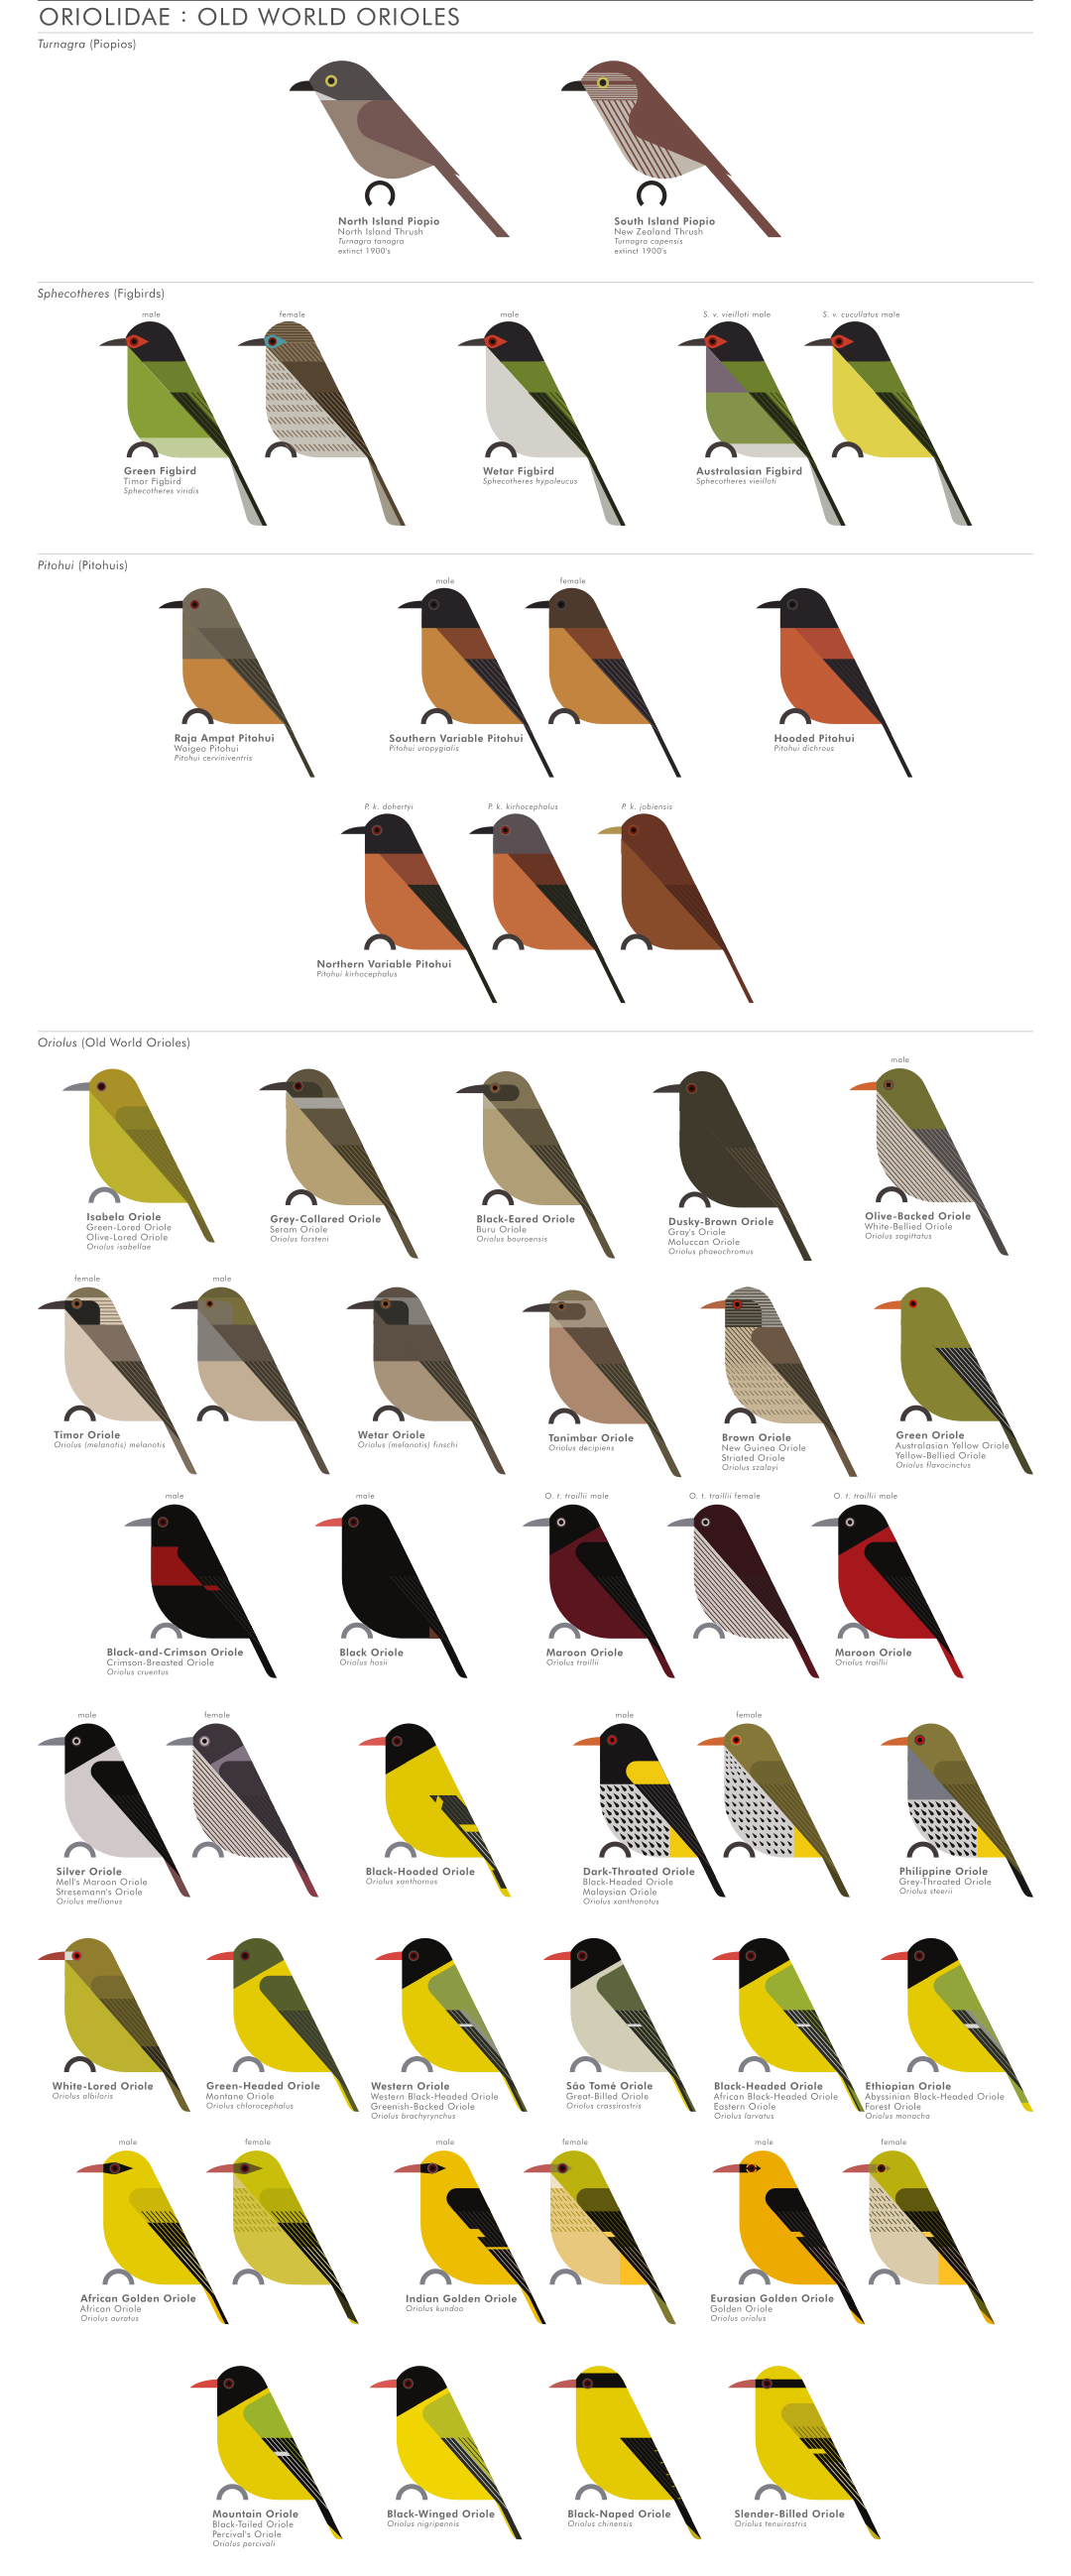 scott partridge - AVE - avian vector encyclopedia - old world orioles - bird vector art